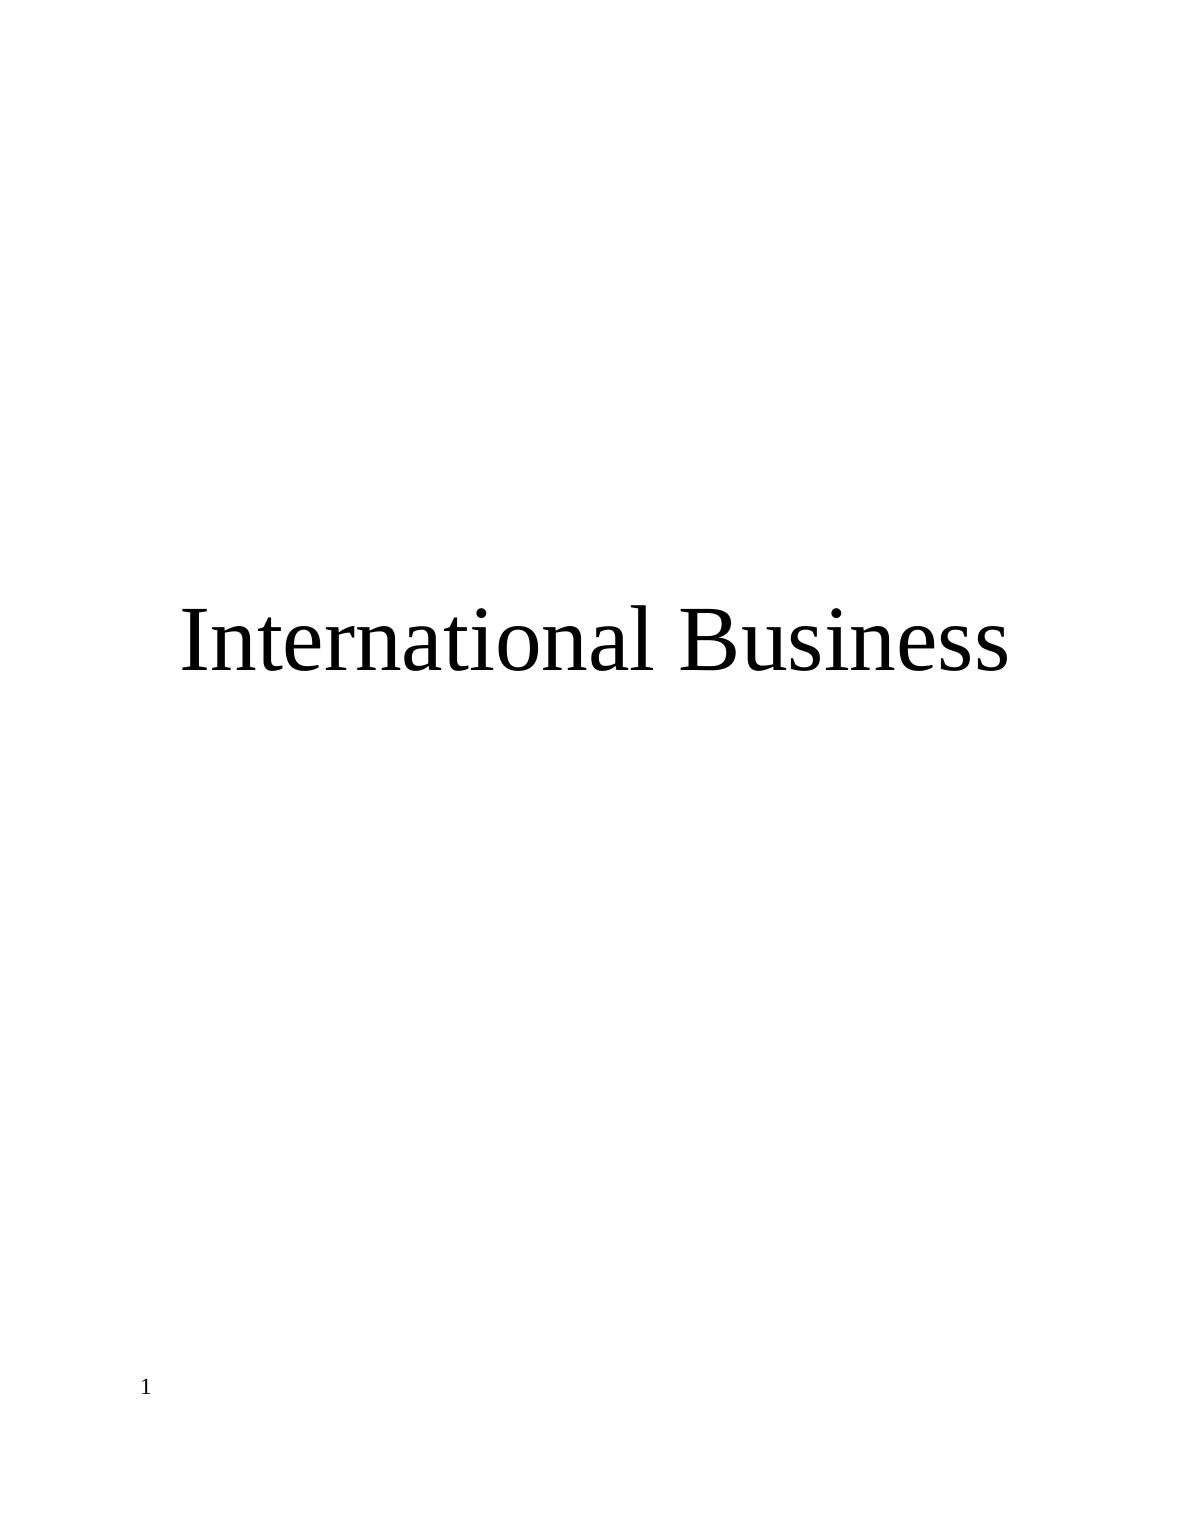 Research Assignment - International Business (Doc)_1